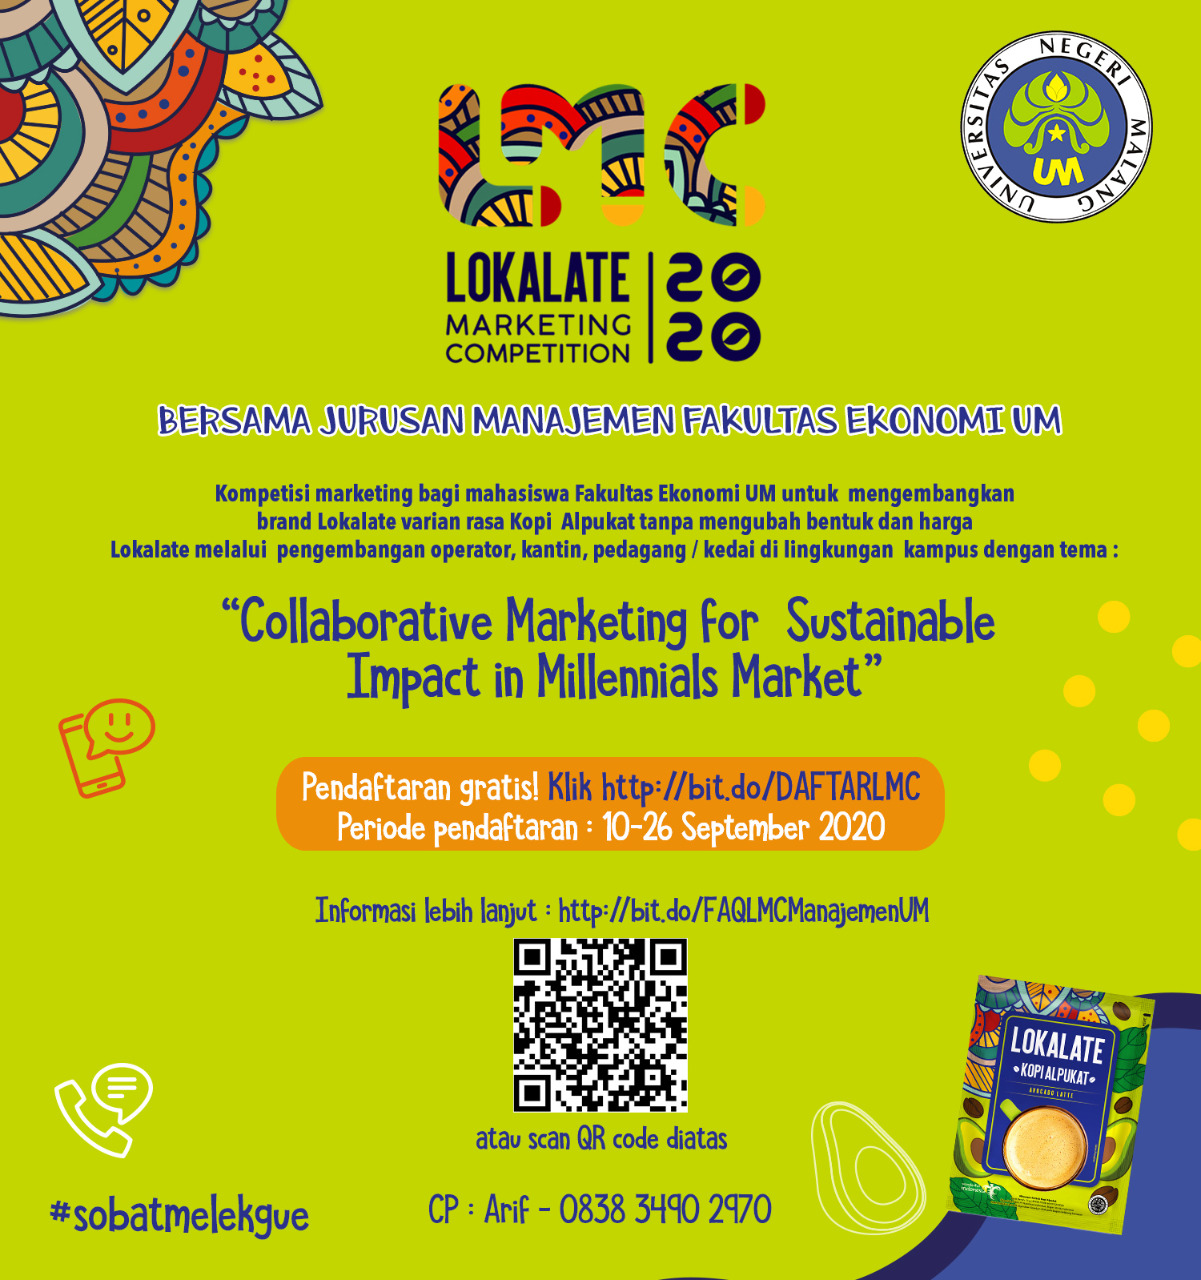 Lokalate Marketing Competition 2020